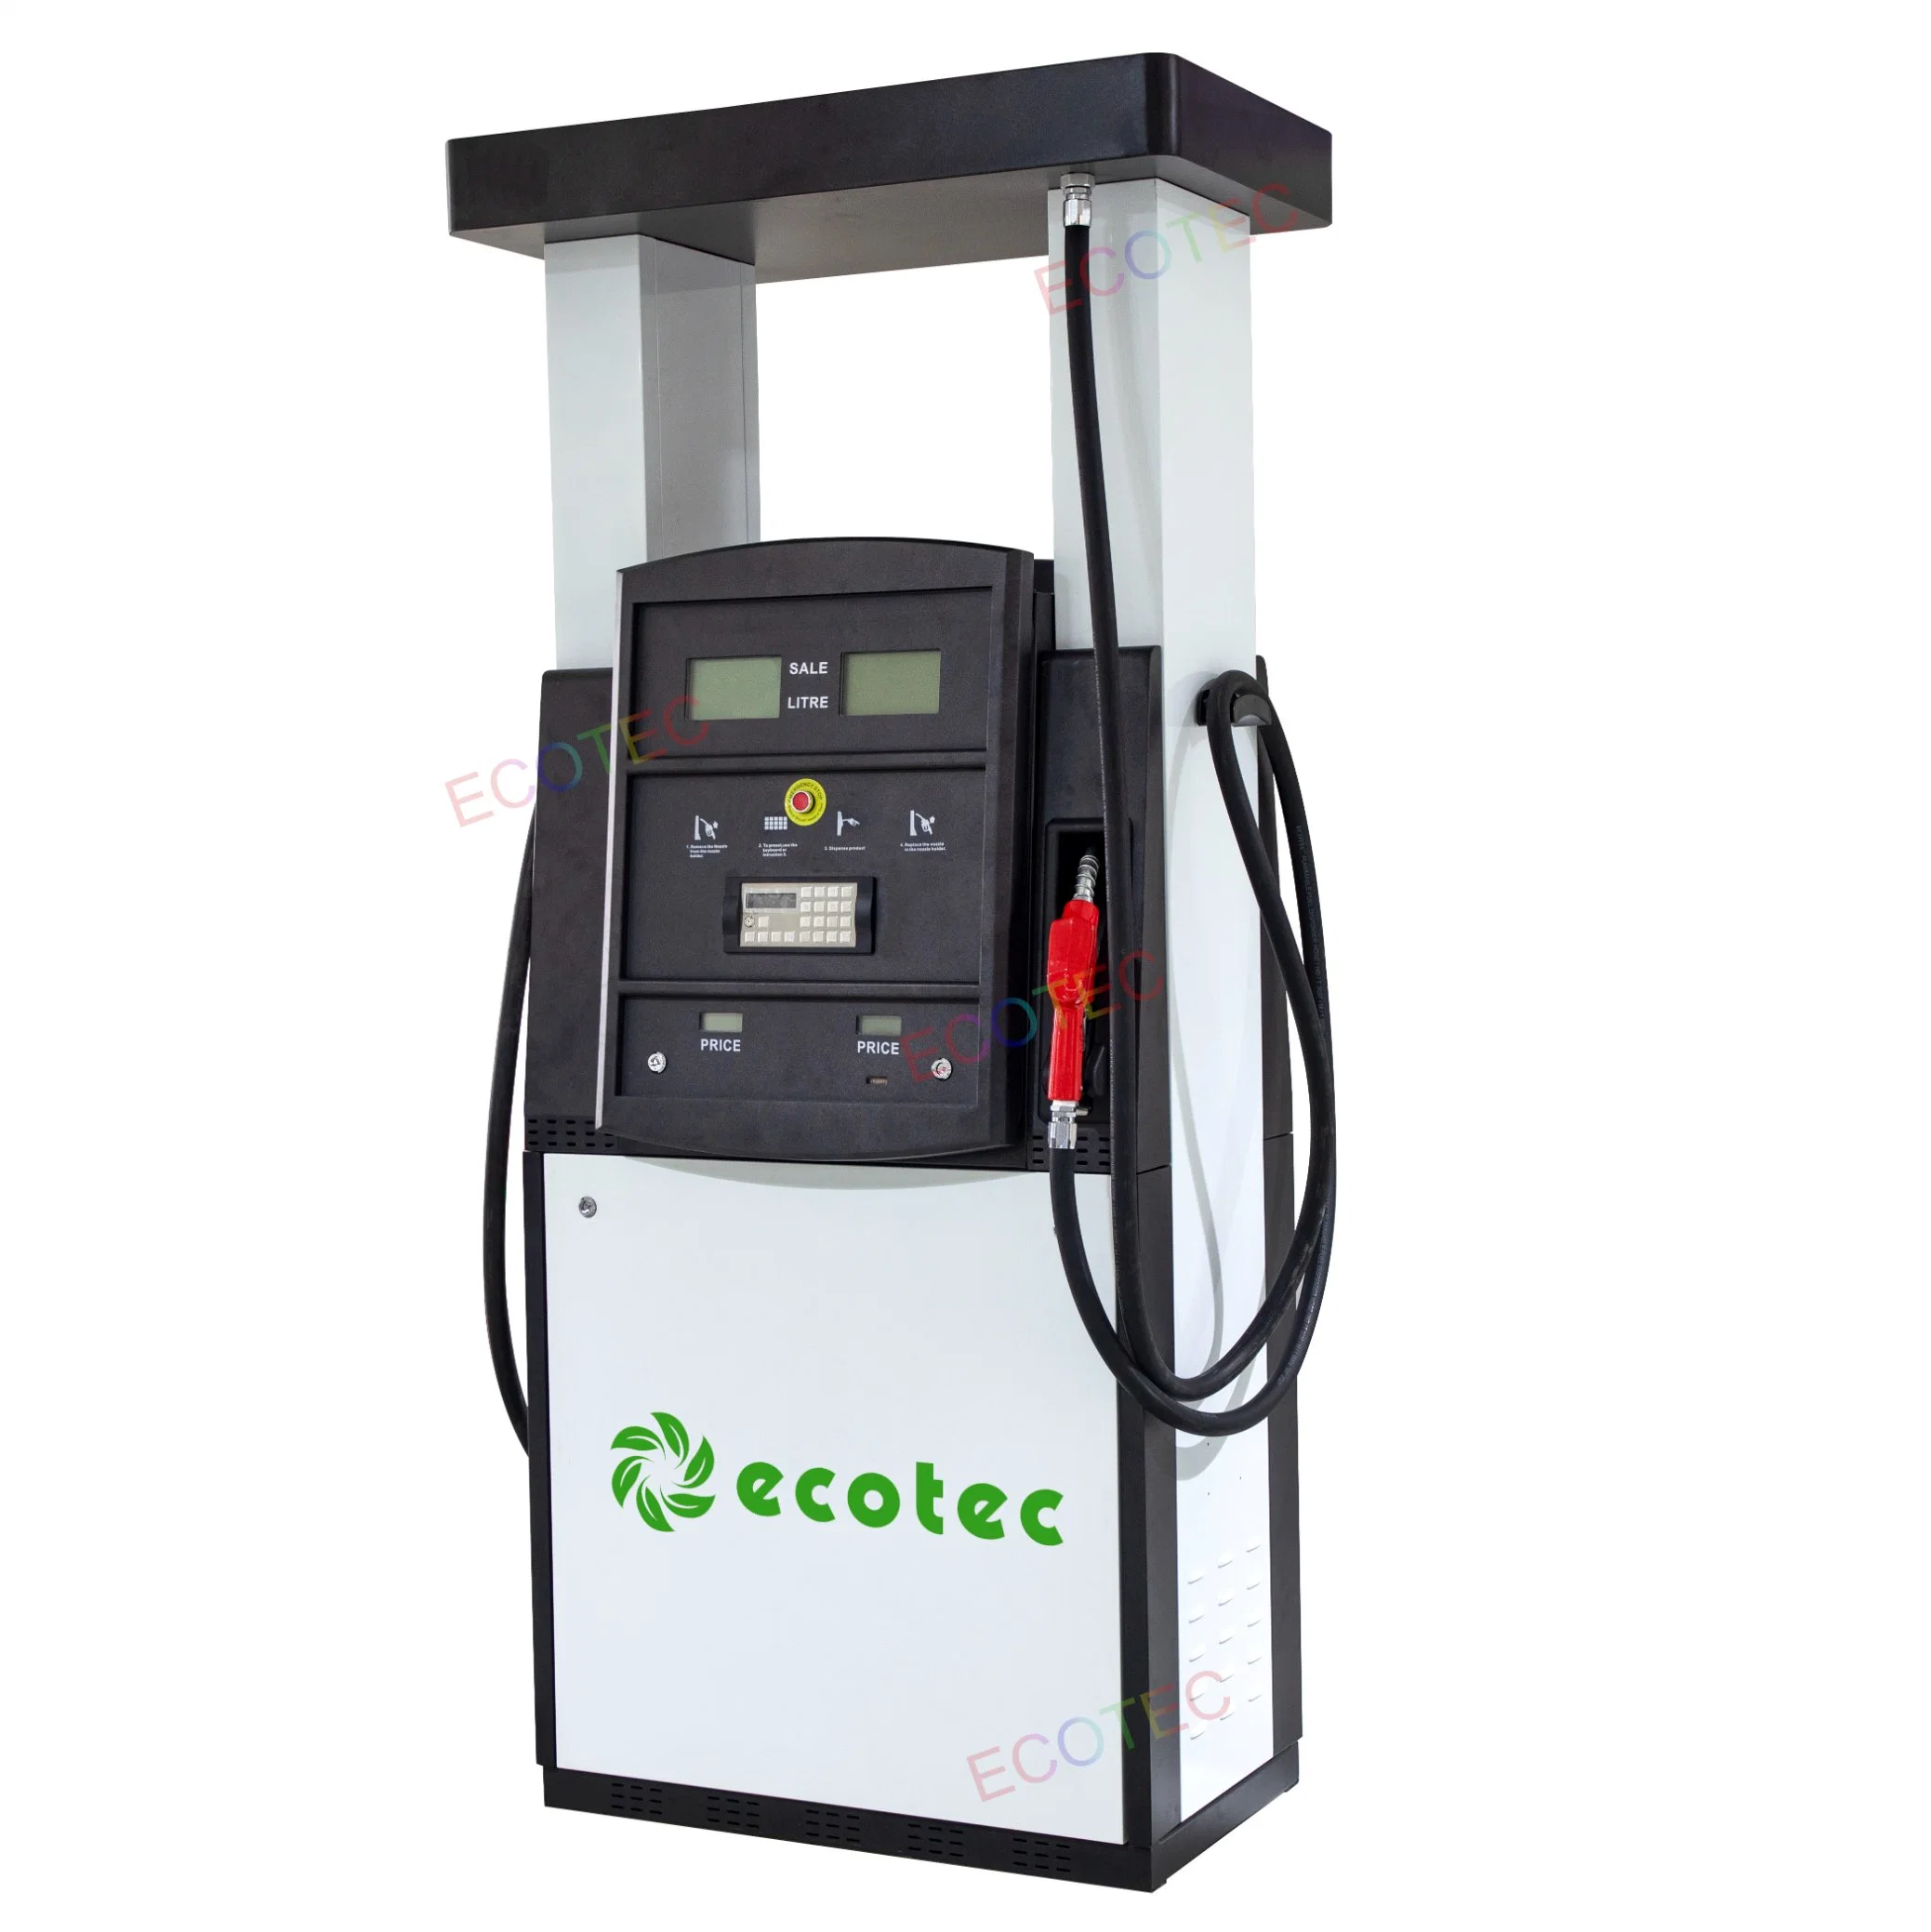 Ecotec Petrol Station Gilbarco 2 Nozzle Fuel Dispenser Price for Sale